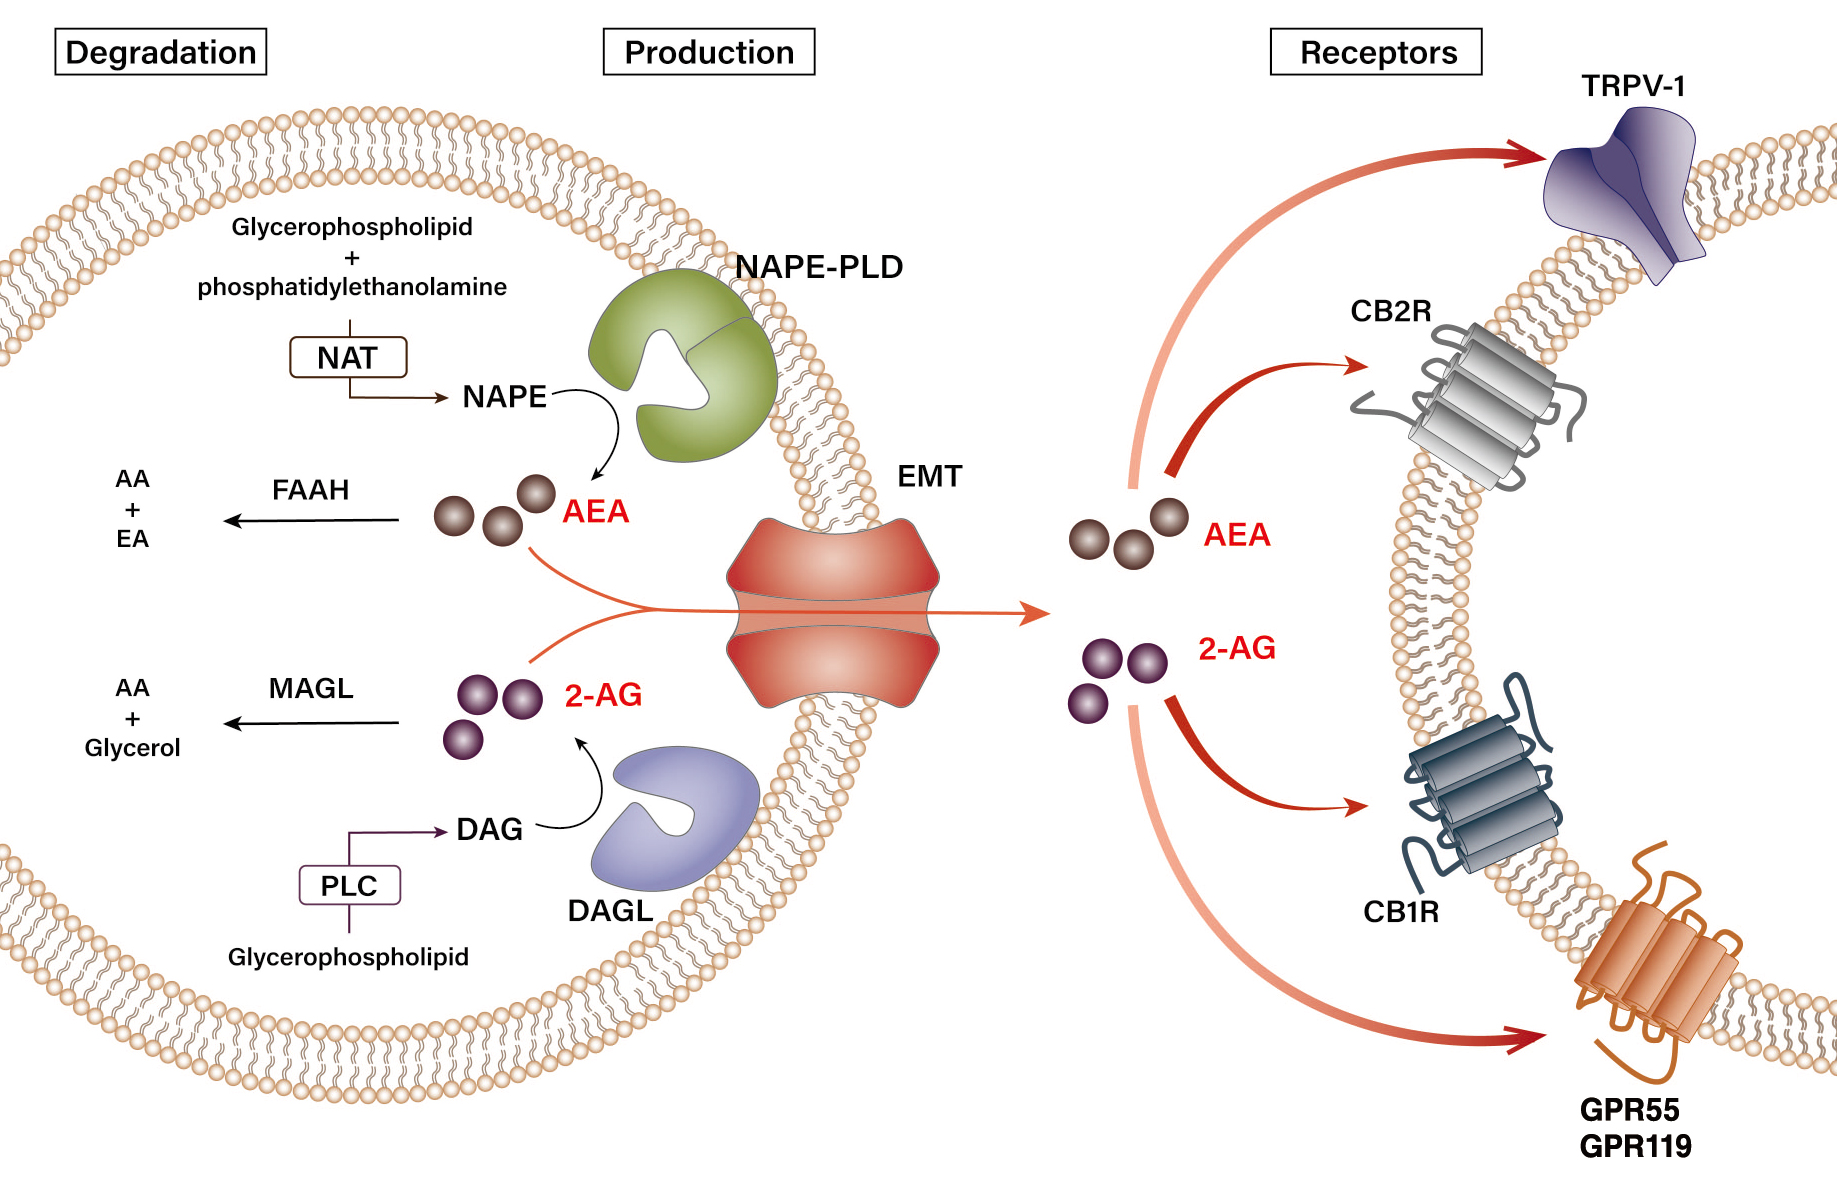 Biosynthesis and degradation pathways of endocannabinoids. 